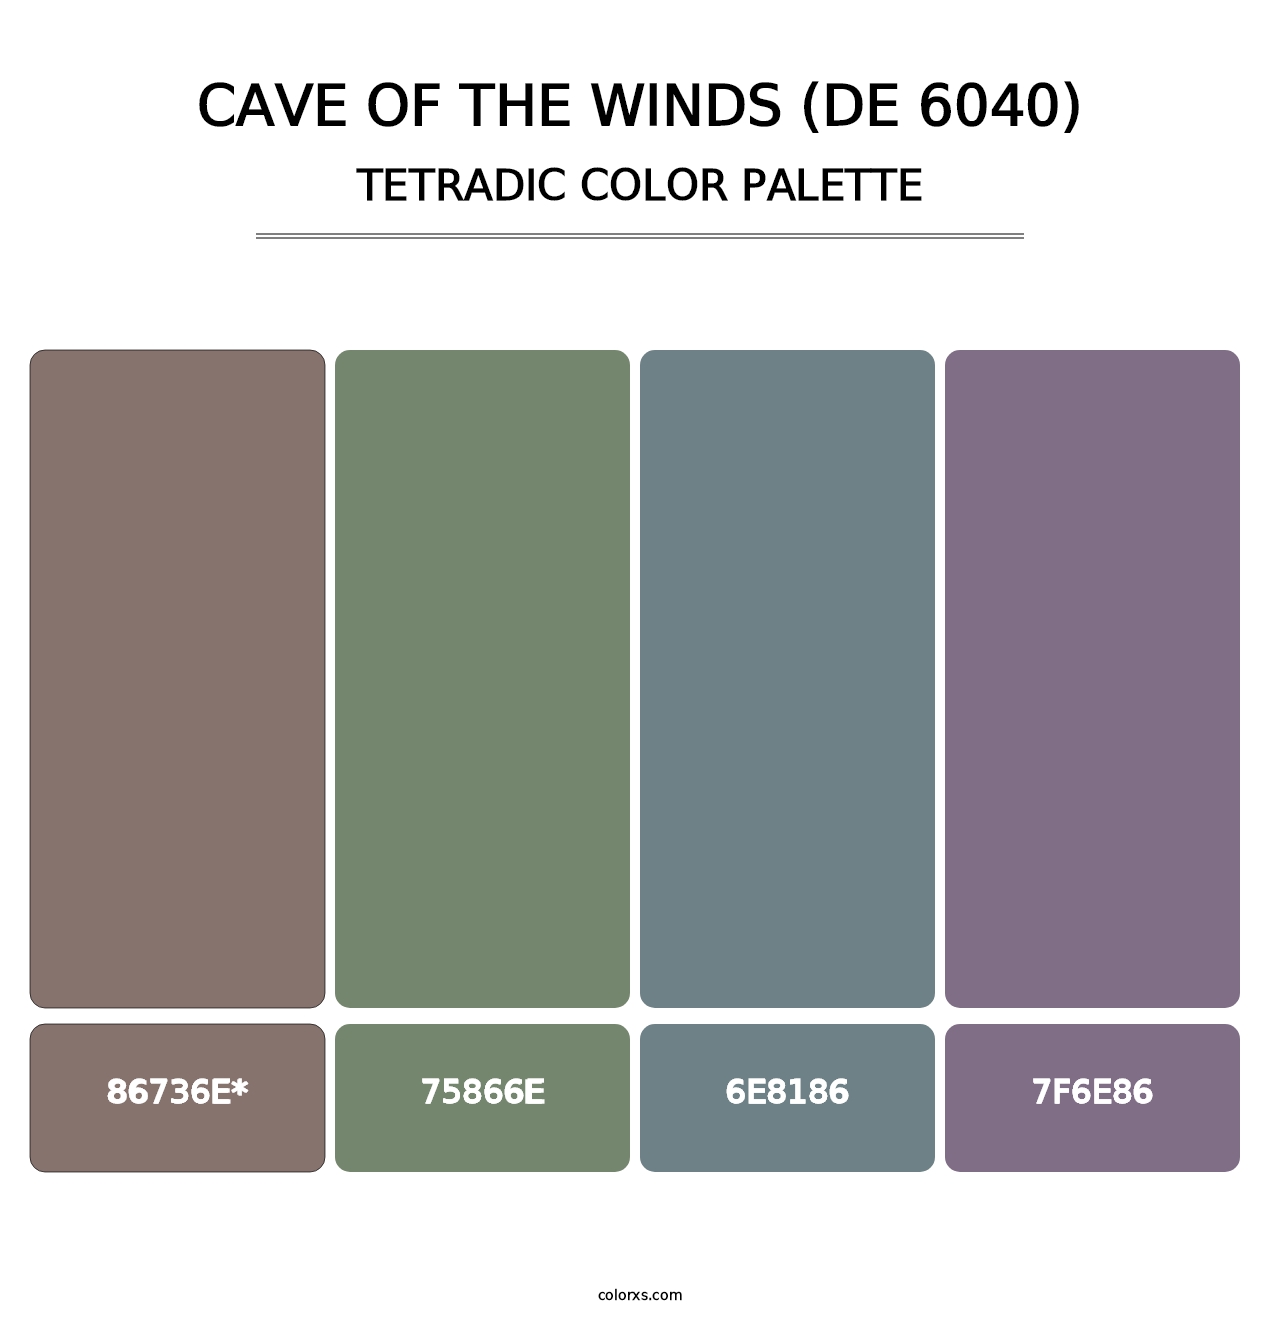 Cave of the Winds (DE 6040) - Tetradic Color Palette